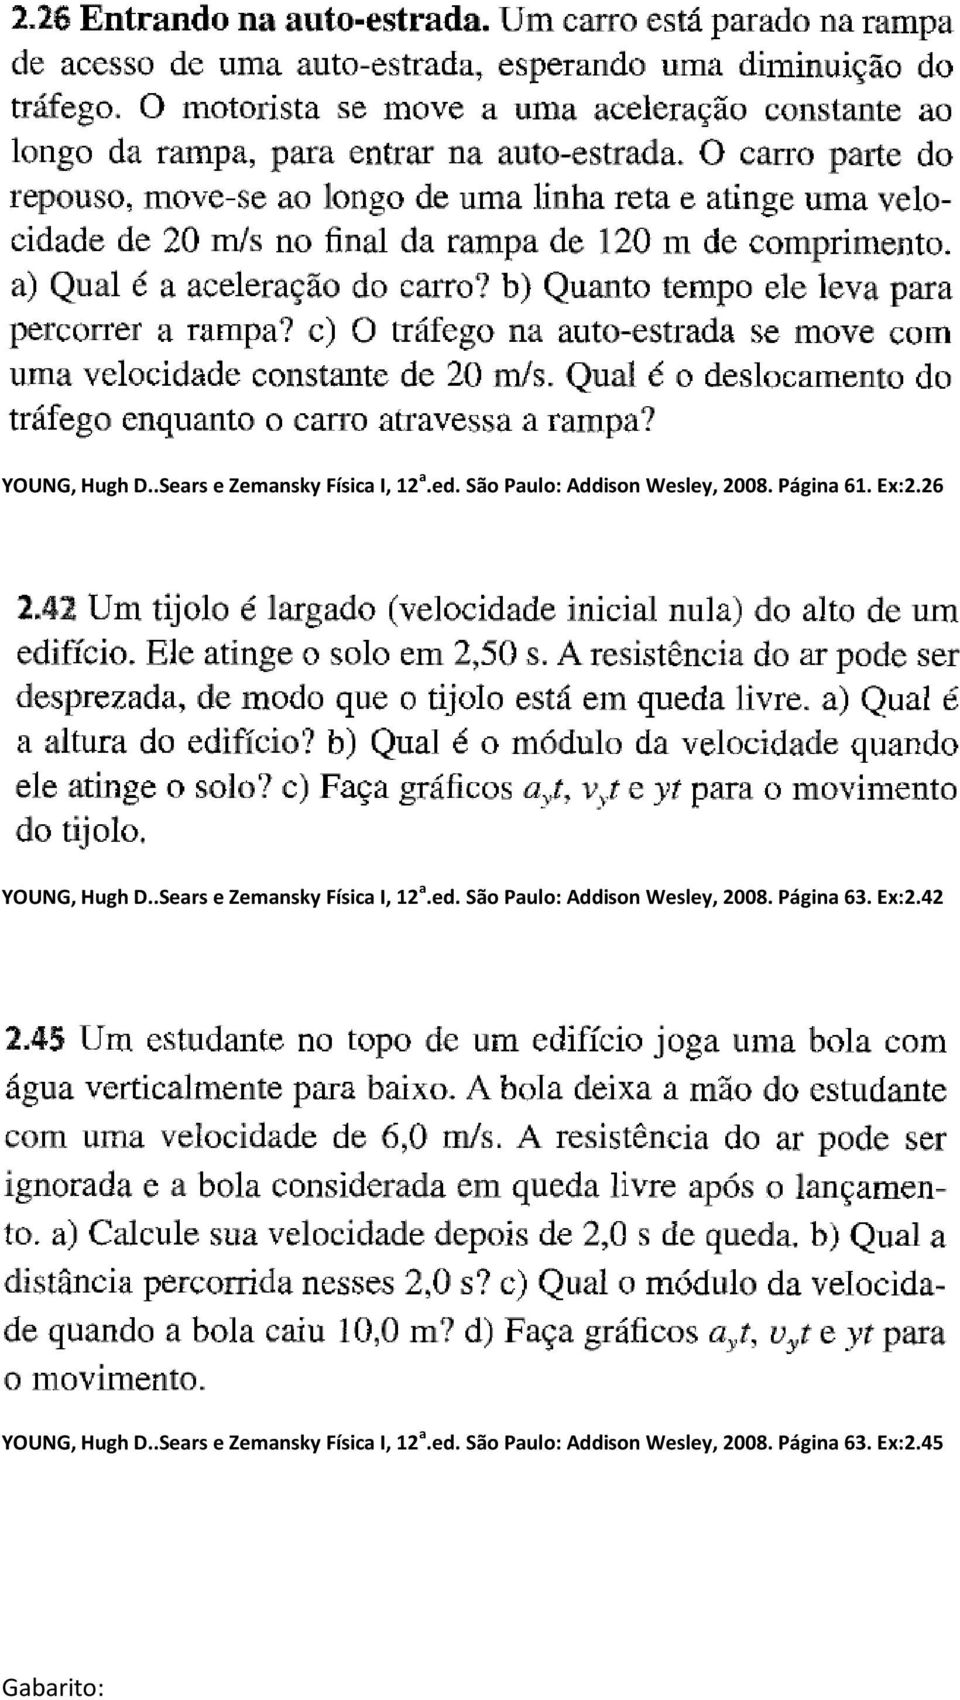 26  São Paulo: Addison Wesley, 2008. Página 63. Ex:2.